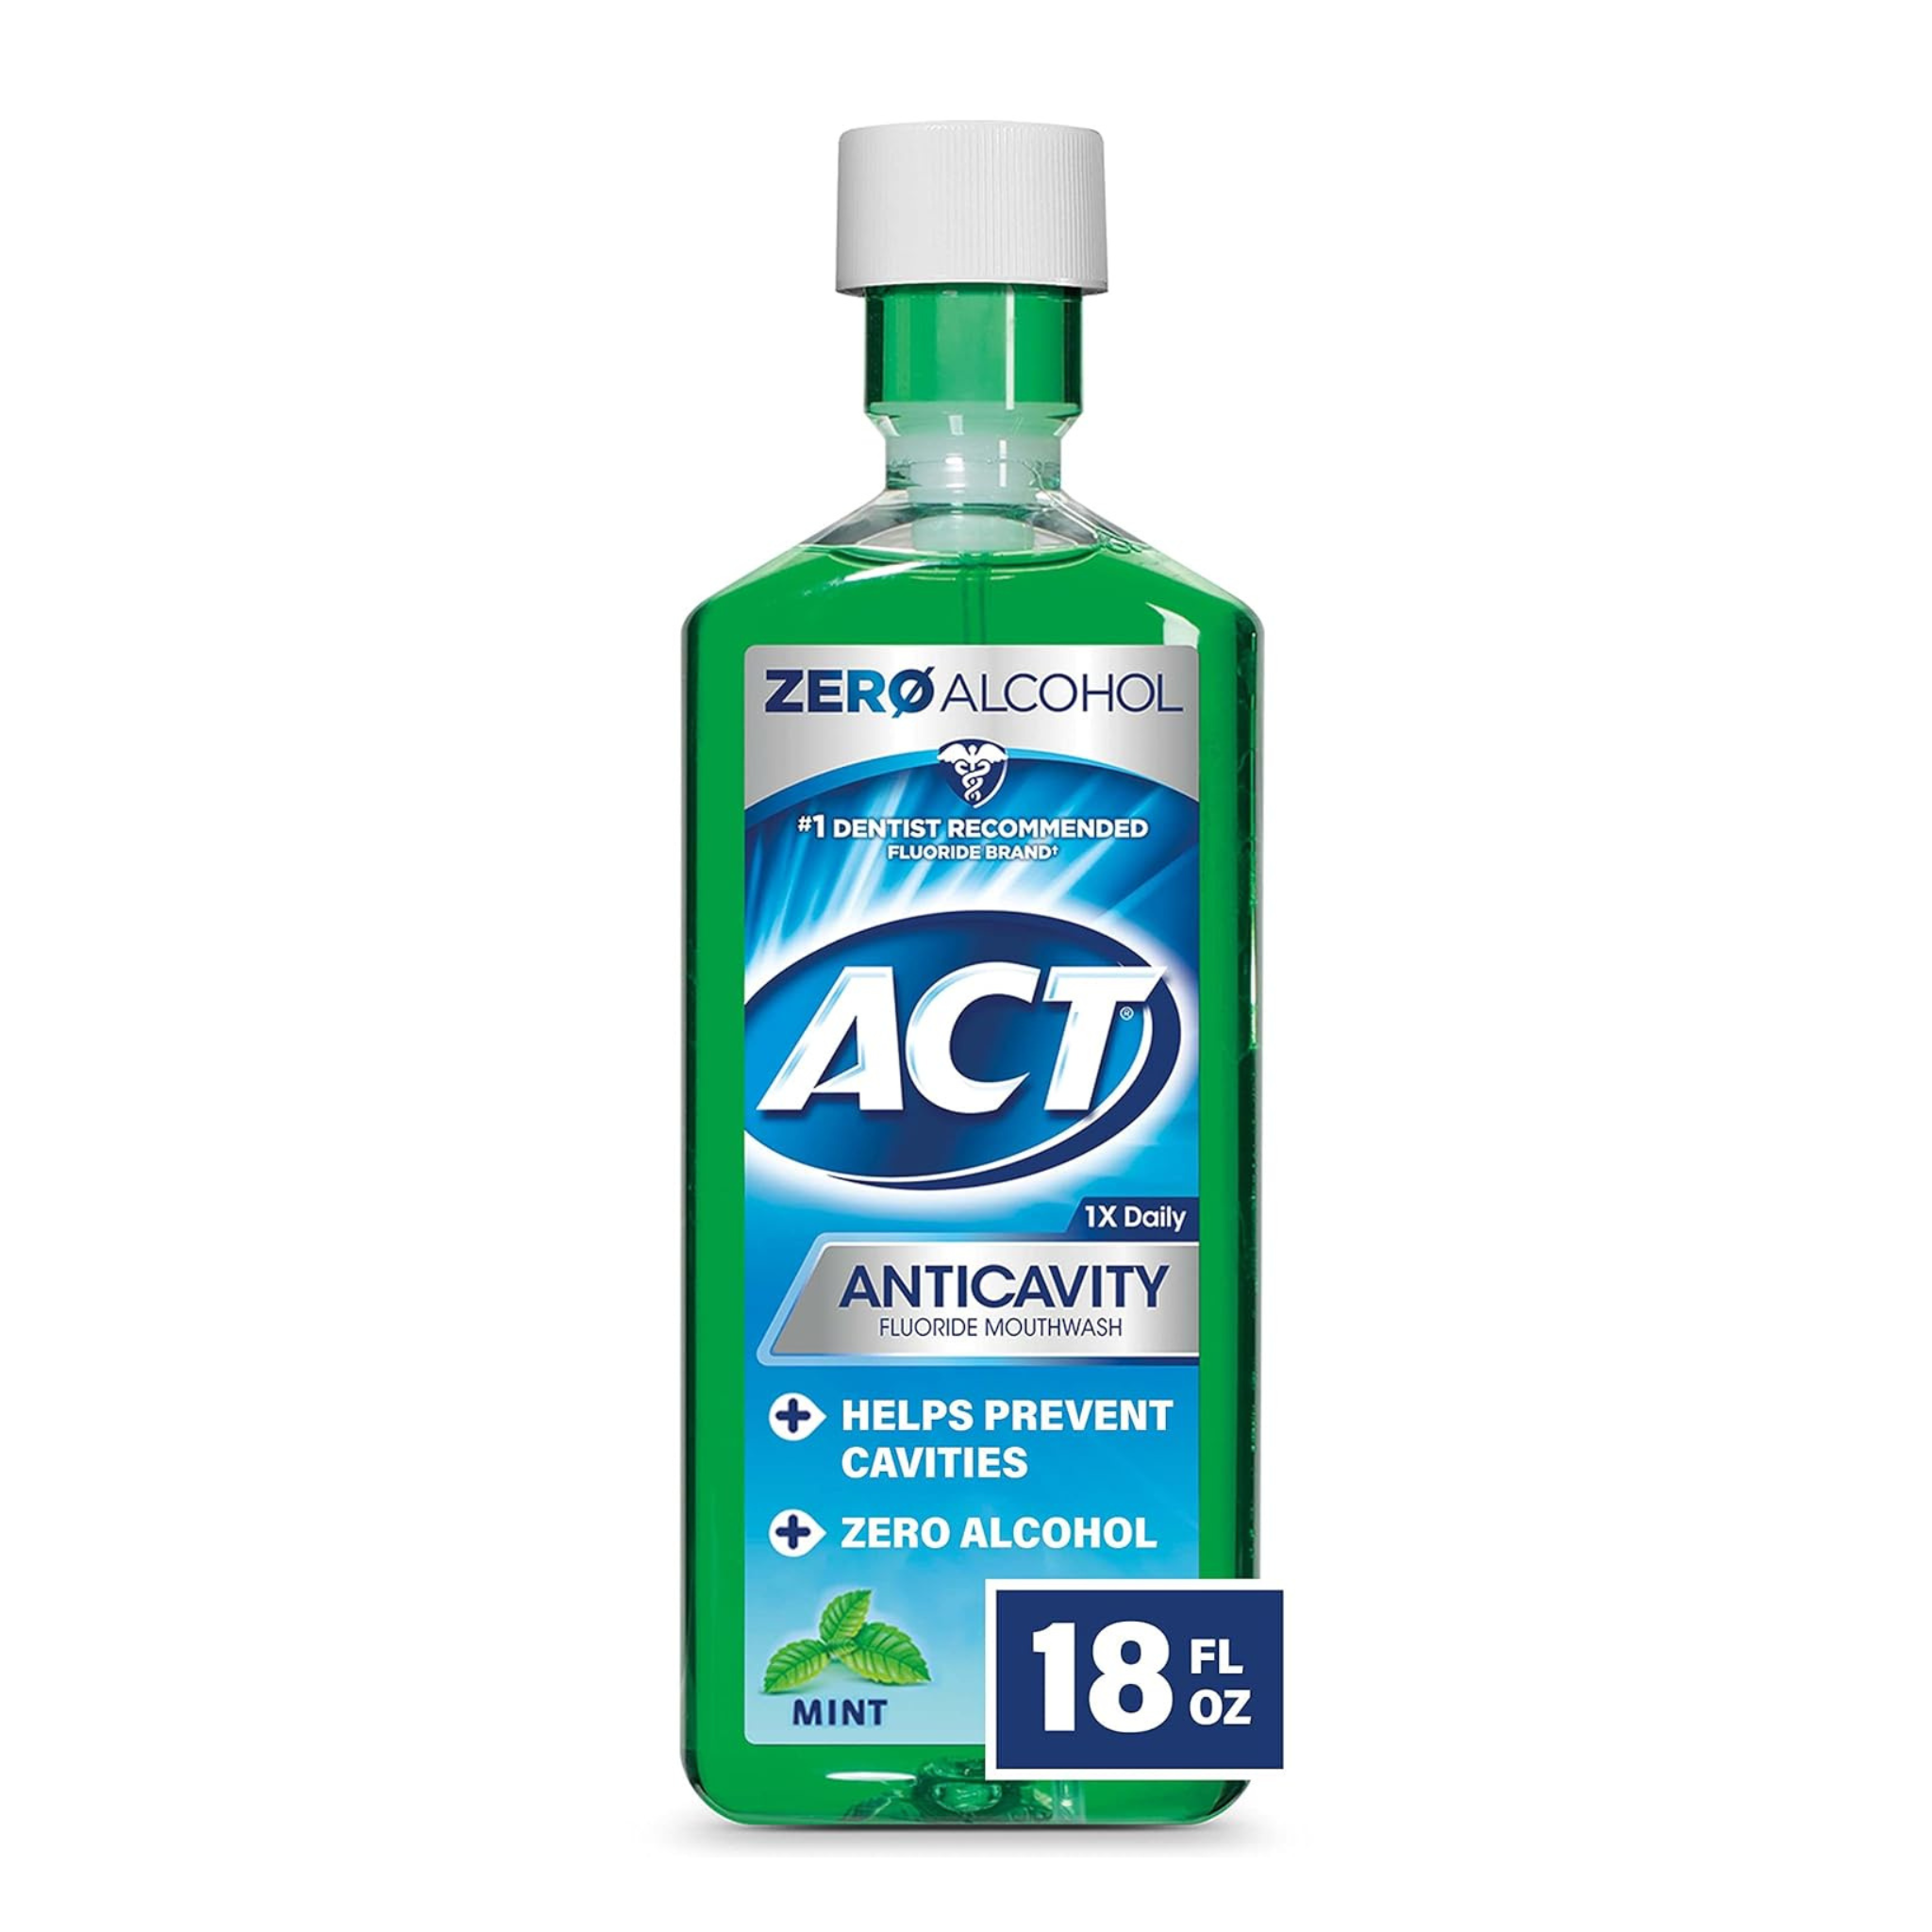 Get 4 Bottles Of ACT Anticavity Mouthwash Plus Get A $5 Amazon Credit!